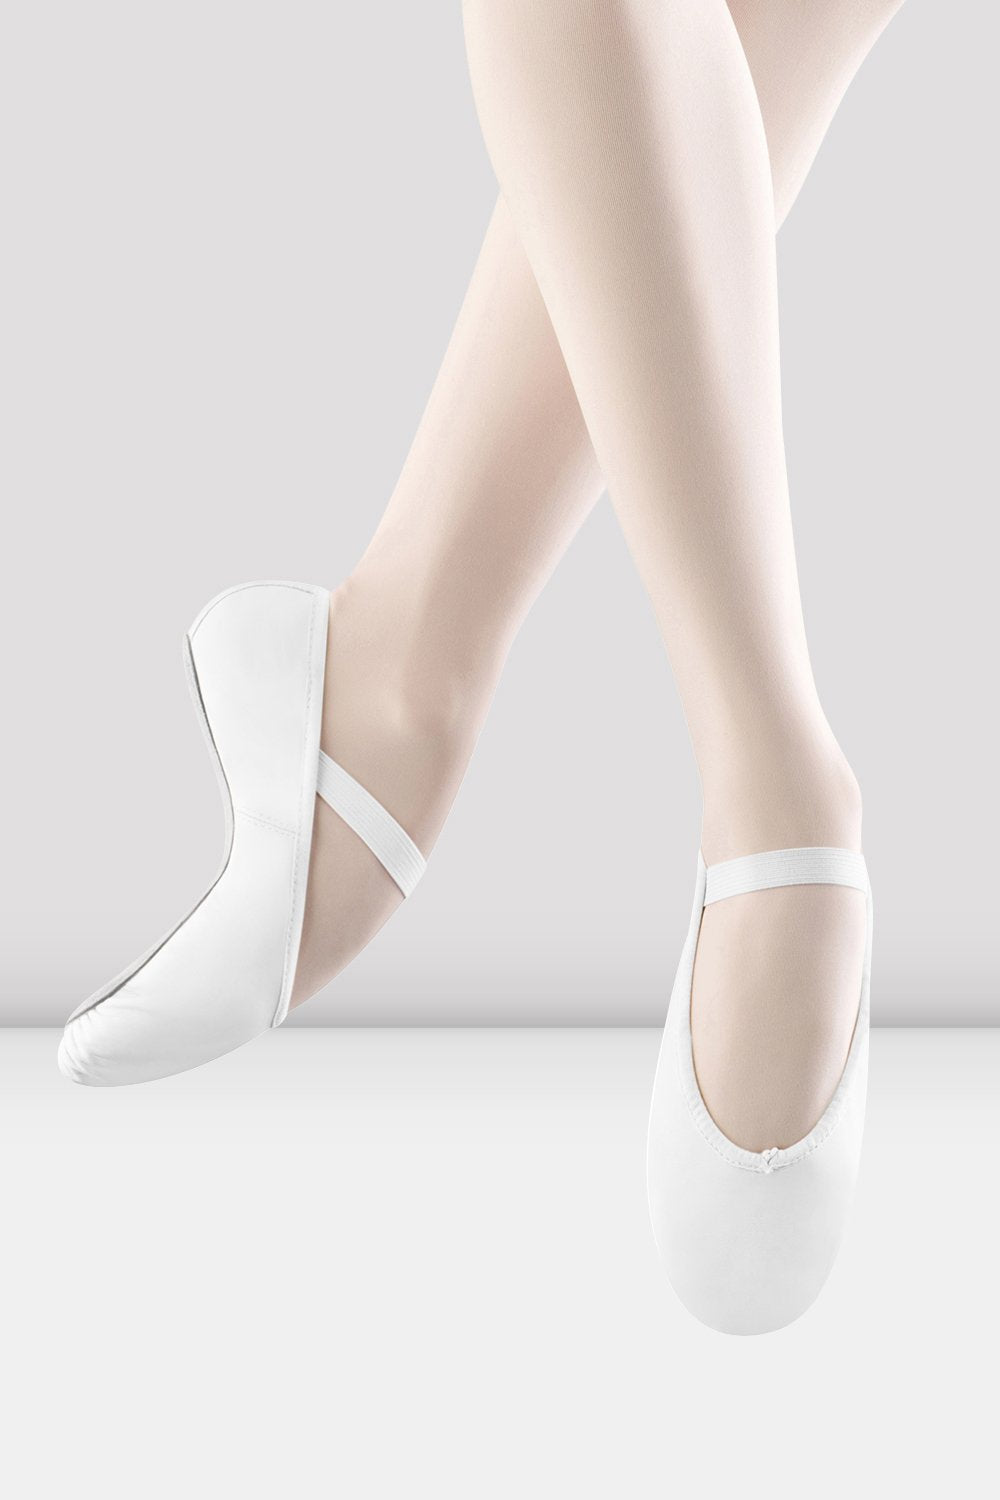 BLOCH Arise Ballet Shoe White